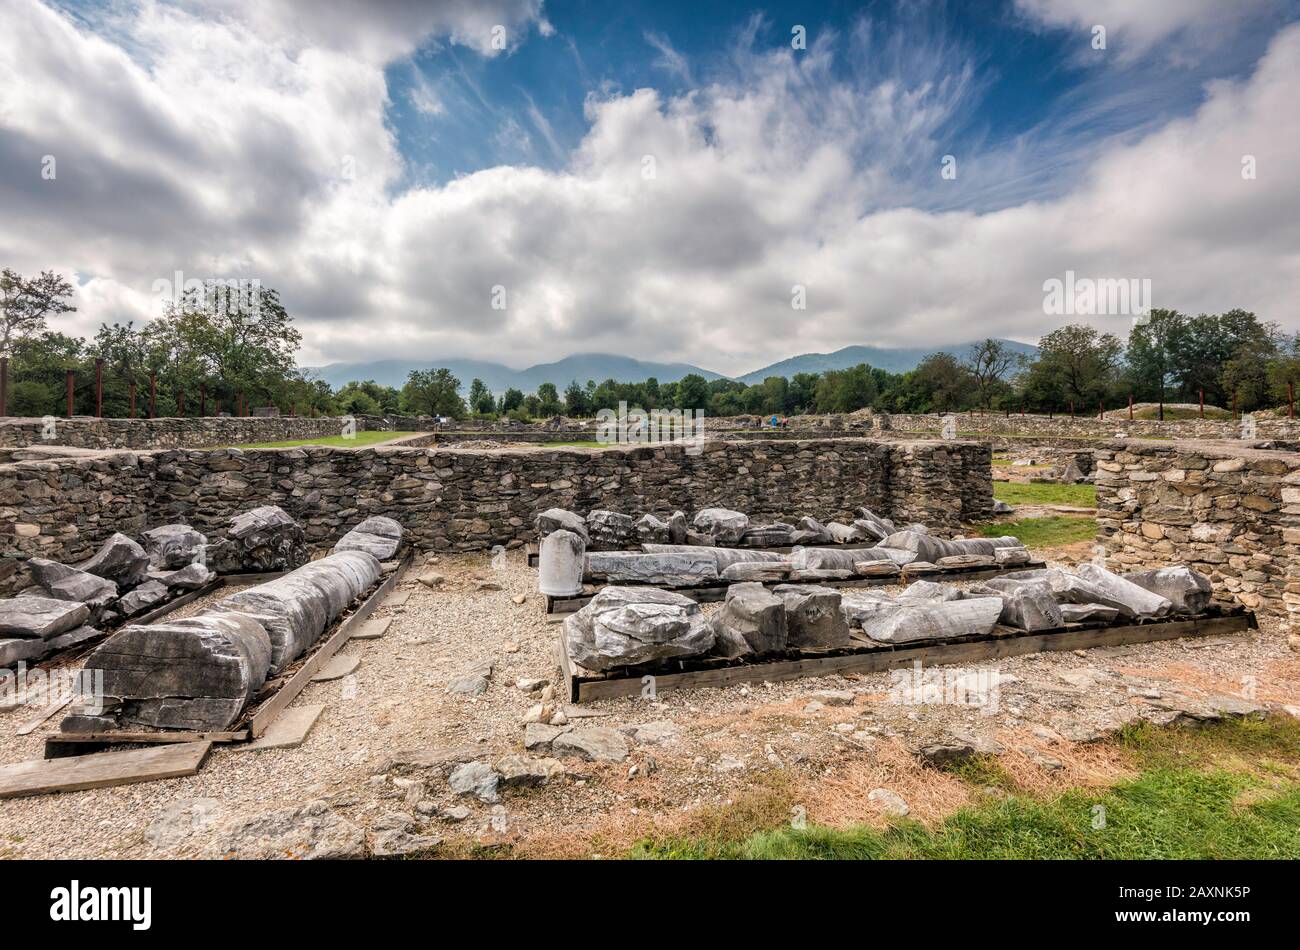 Forum section at Ulpia Traiana, 2nd century Roman Dacia city ruins in village of Sarmizegetusa, Hunedoara County, Transylvania Region, Romania Stock Photo